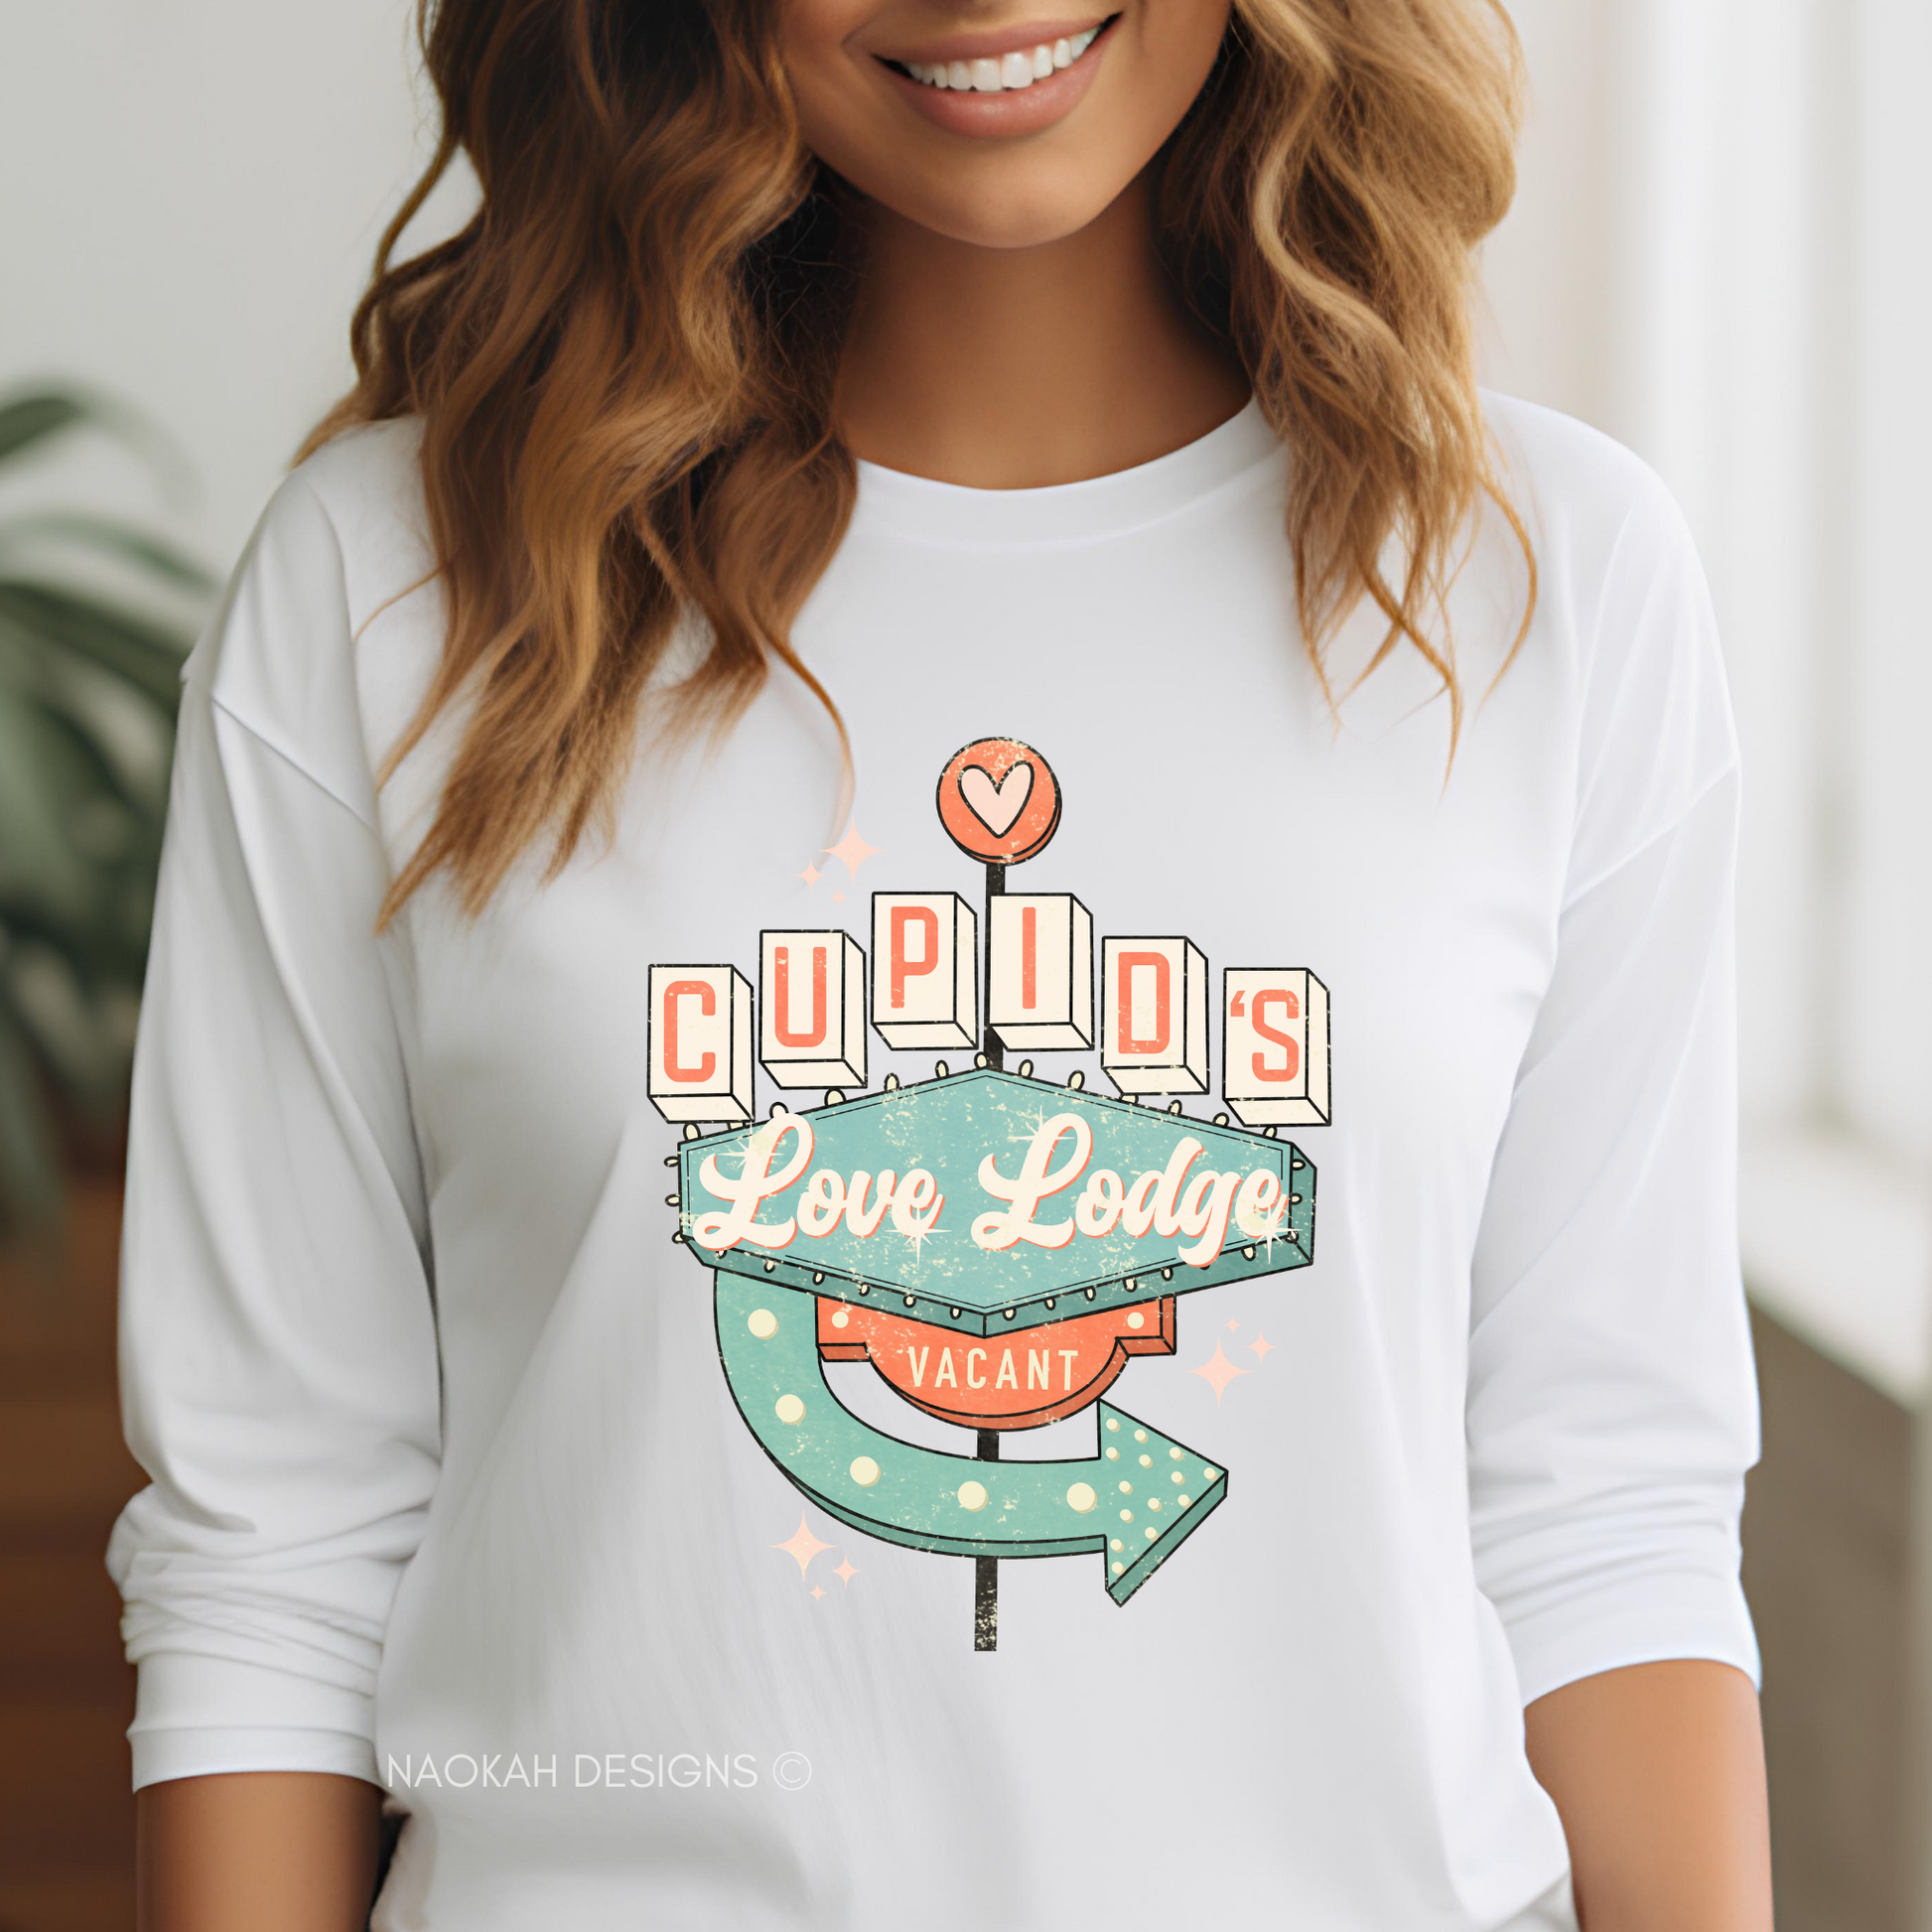 Cupids Love Lodge Shirt, Cute Valentines Shirt, Cupids Love Shirt, Love Lodge Shirt, Boho Western Valentine Shirt, Valentines Day Shirt